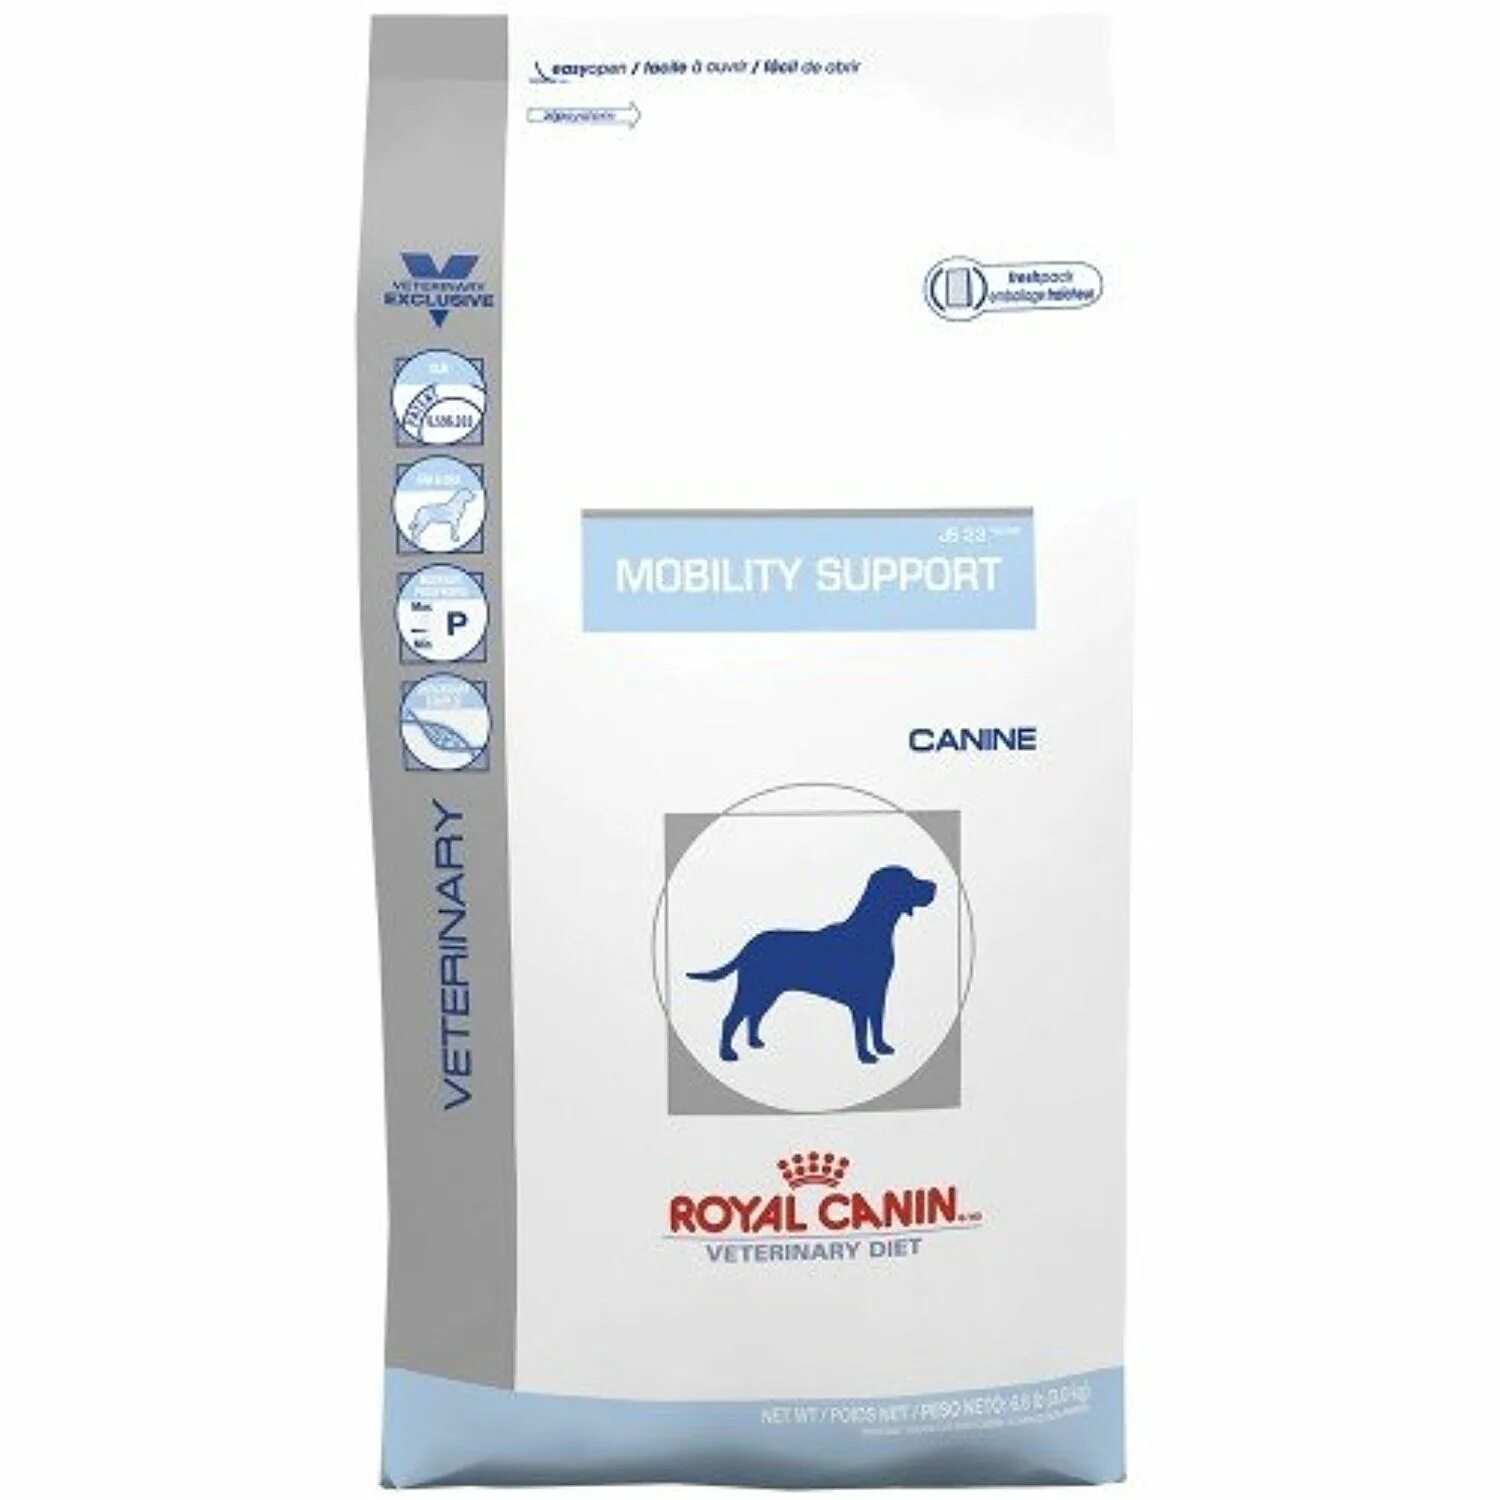 Royal Canin Mobility c2p+ корм для собак 7 кг. Роял Канин для собак Mobility c2p+. Роял Канин Мобилити с2р+ для собак. Роял Канин скин суппорт для собак. Лечебный корм для собак при заболевании